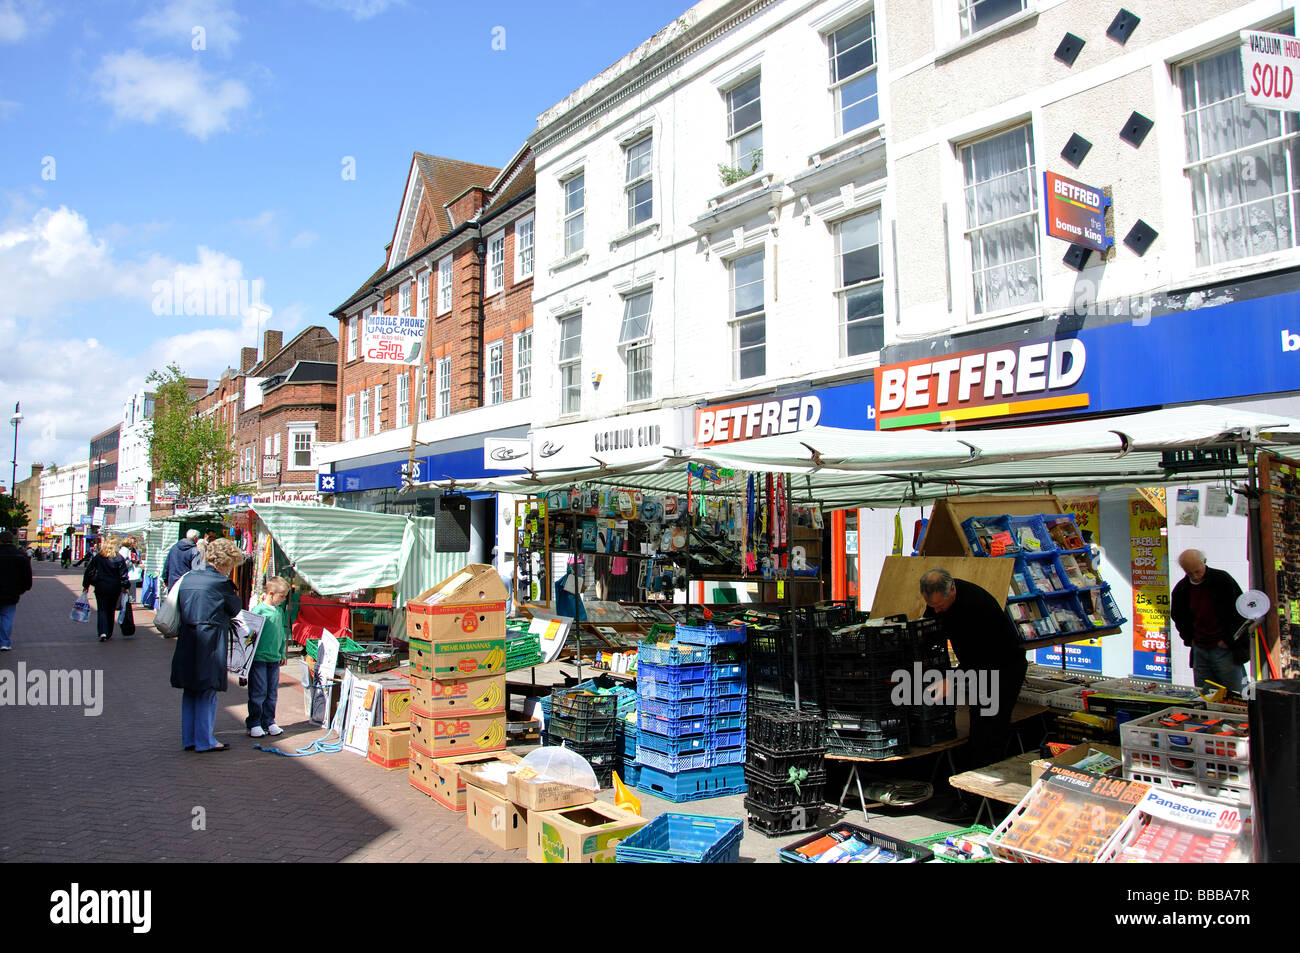 Street market, High Street, Sutton, London Borough of Sutton, Greater London, England, United Kingdom Stock Photo